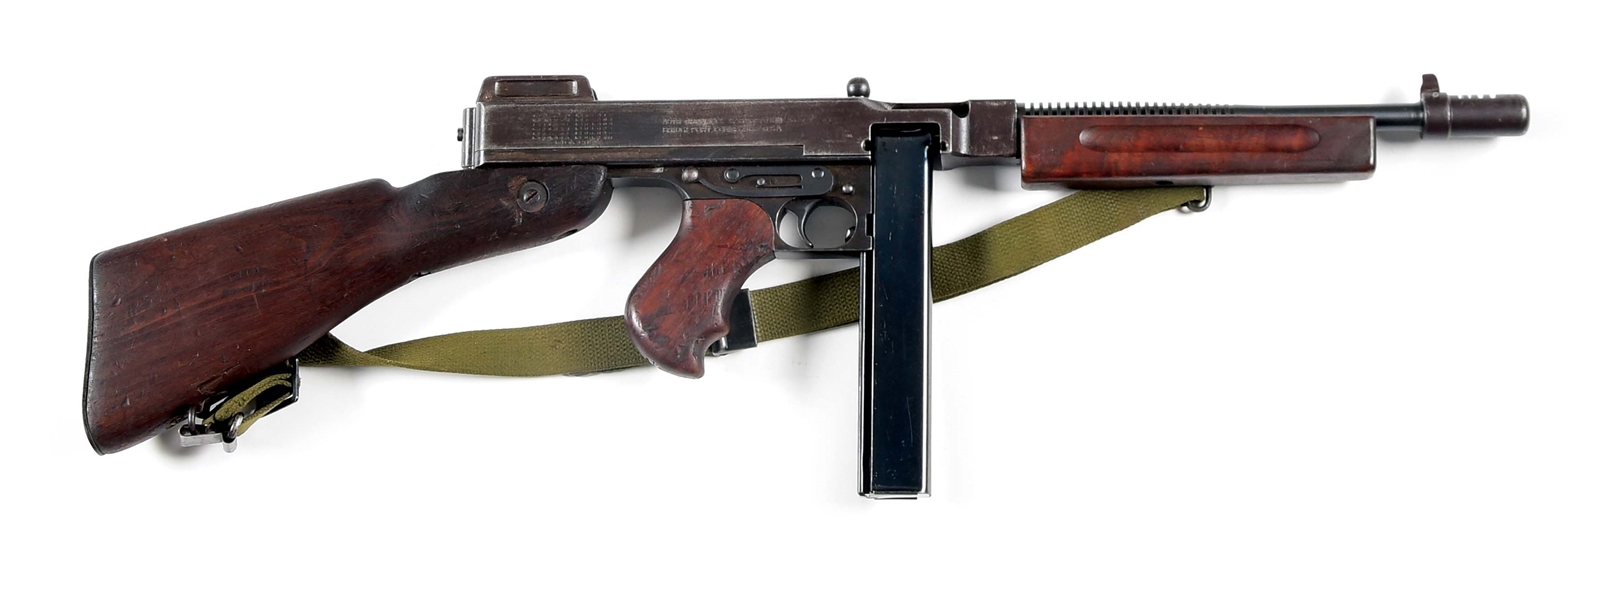 (N) VERY NICE U.S. ORDNANCE MARKED WORLD WAR II ERA AUTO ORDNANCE THOMPSON 1928A1 MACHINE GUN (PRE-86 DEALER SAMPLE).